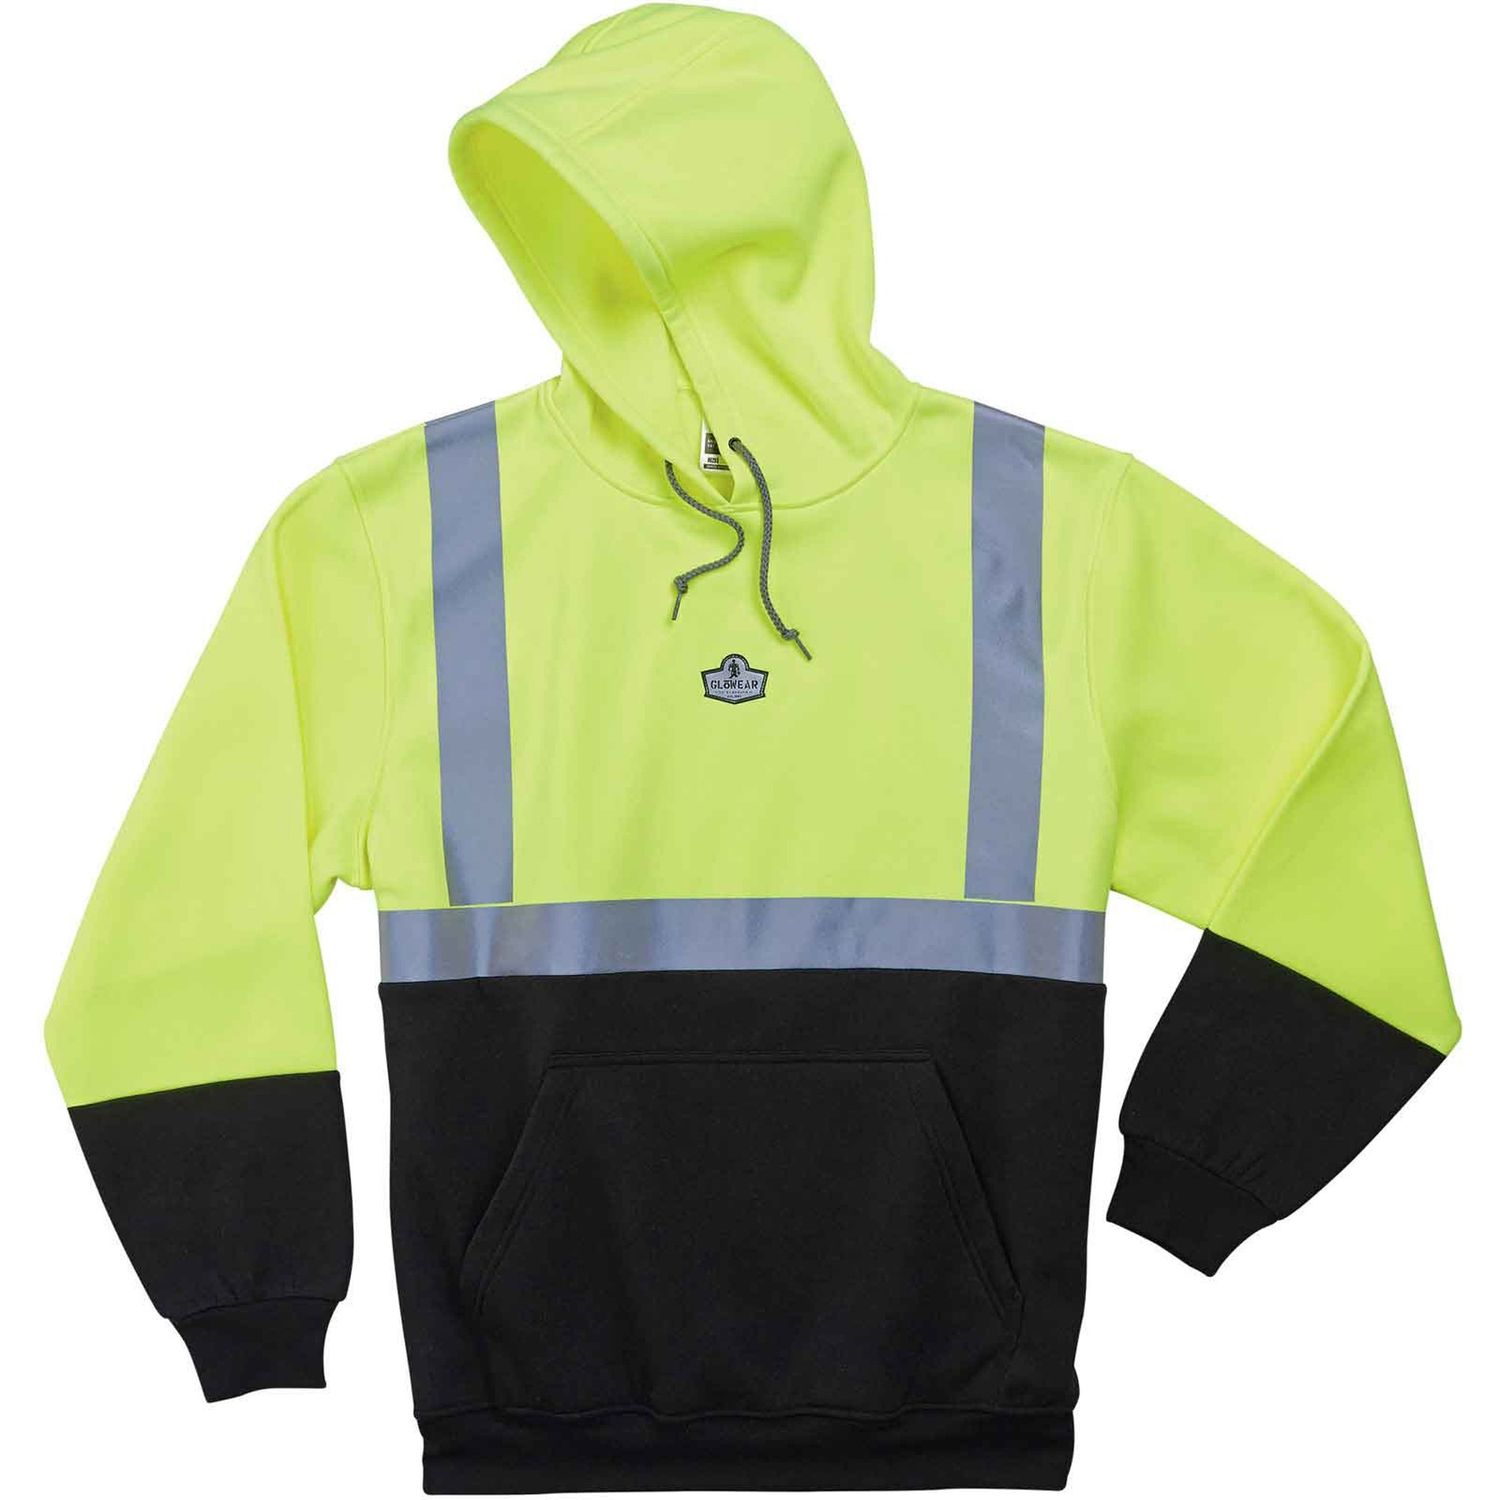 8293 Type R Class 2 Front Hooded Sweatshirt Large (L) Size Hood Collar, Black, Lime, Polar Fleece